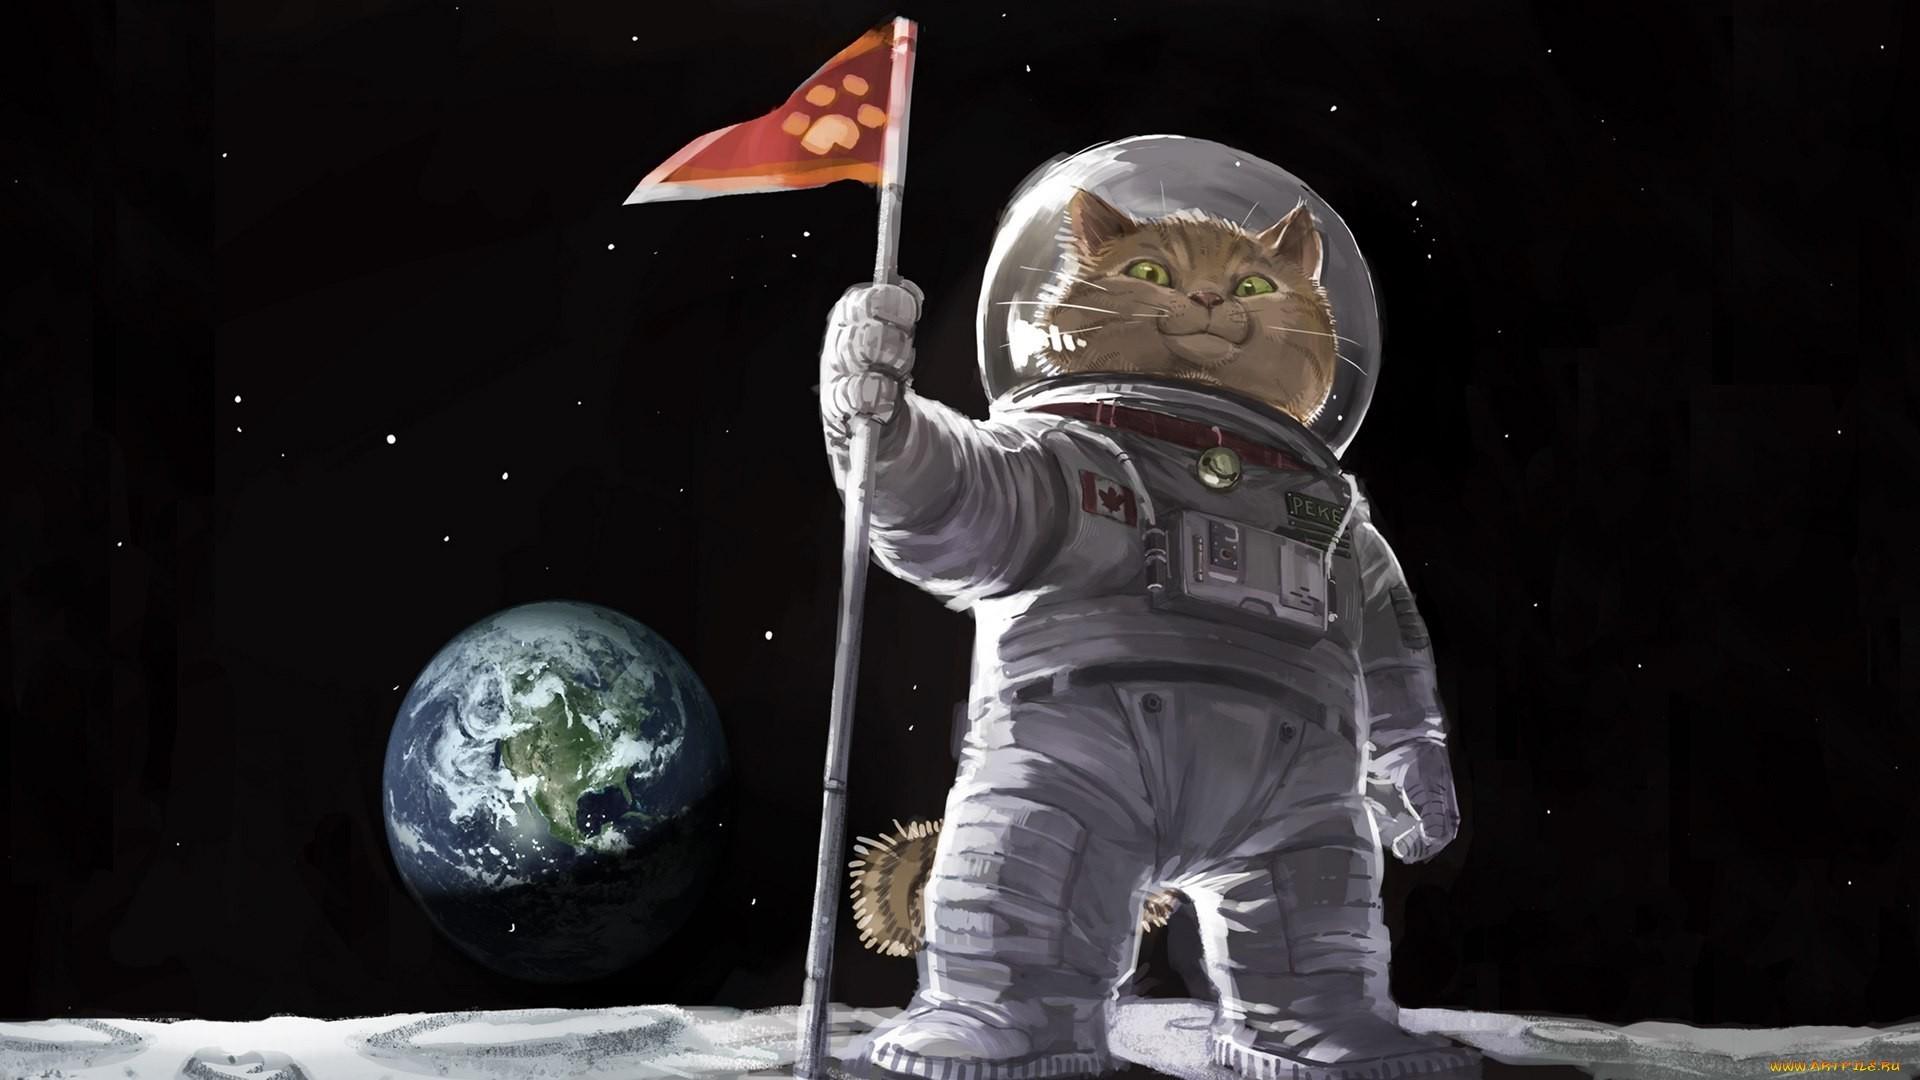 Cartoons Cat Astronaut On The Moon wallpaper